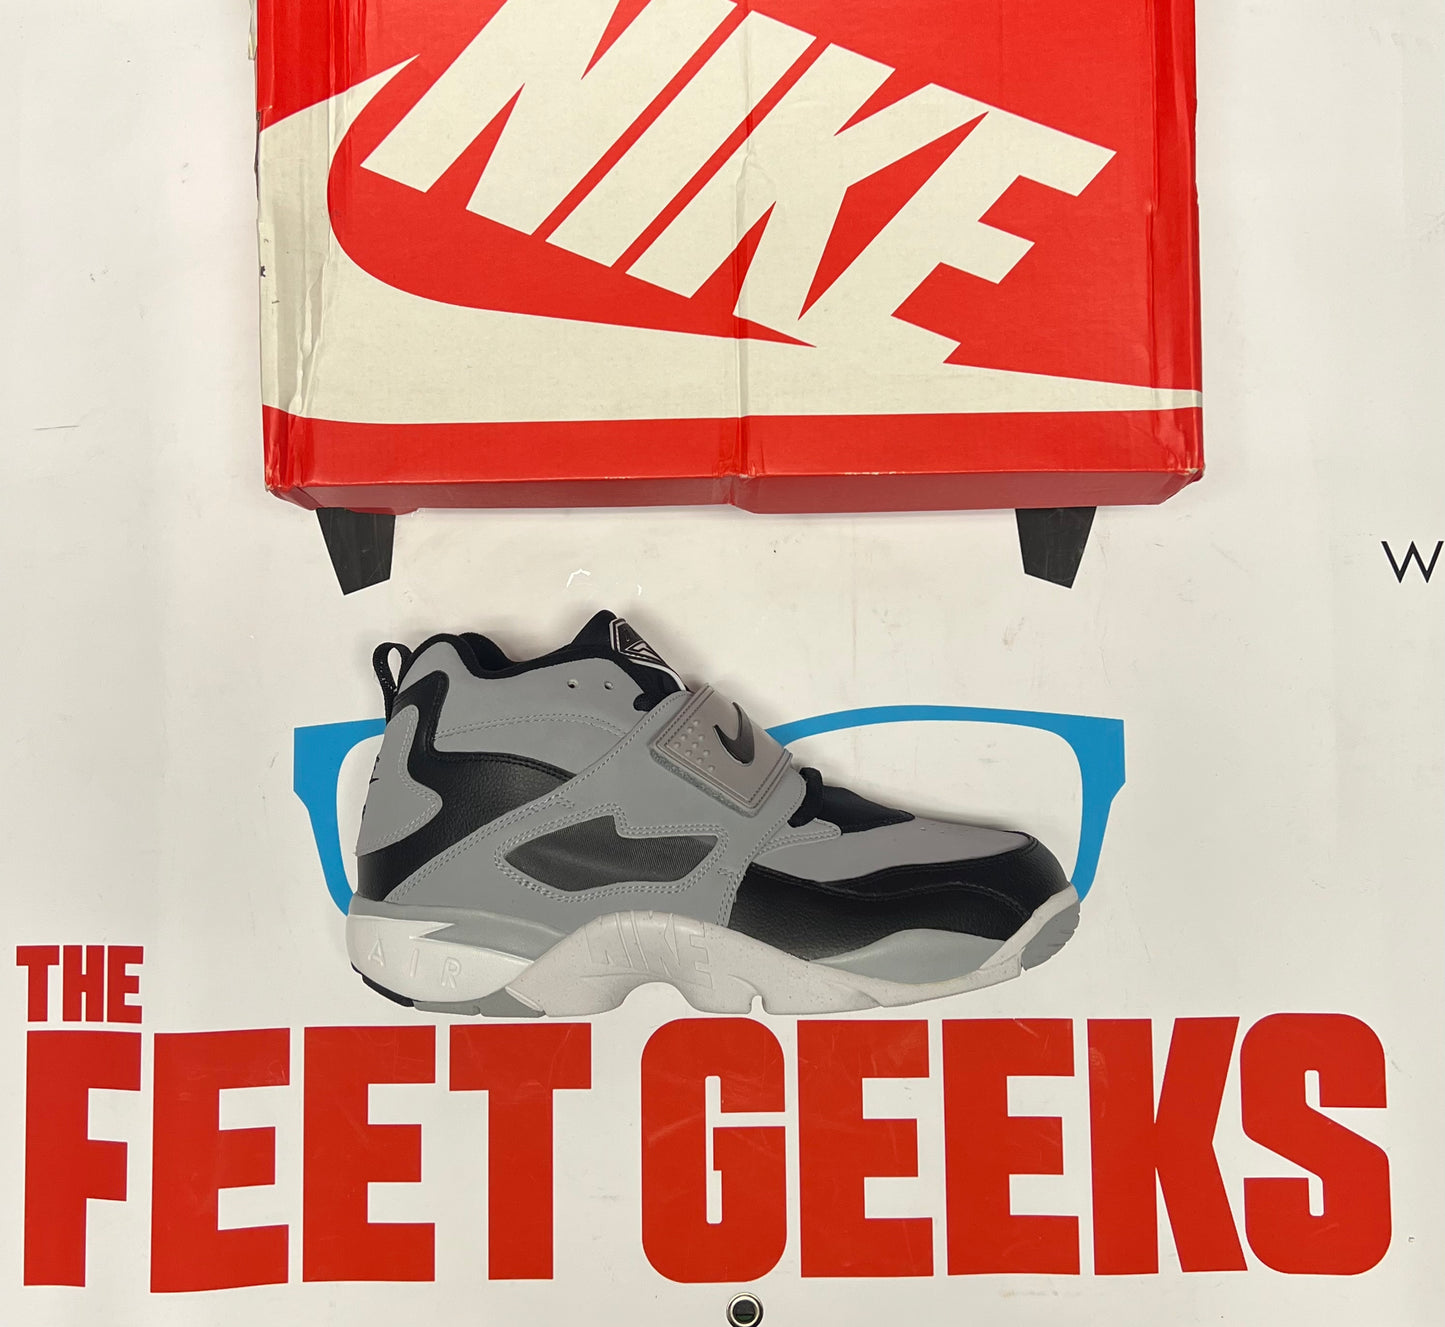 Men’s Nike Air Diamond Turf Shoes Size 10.5 Brand New